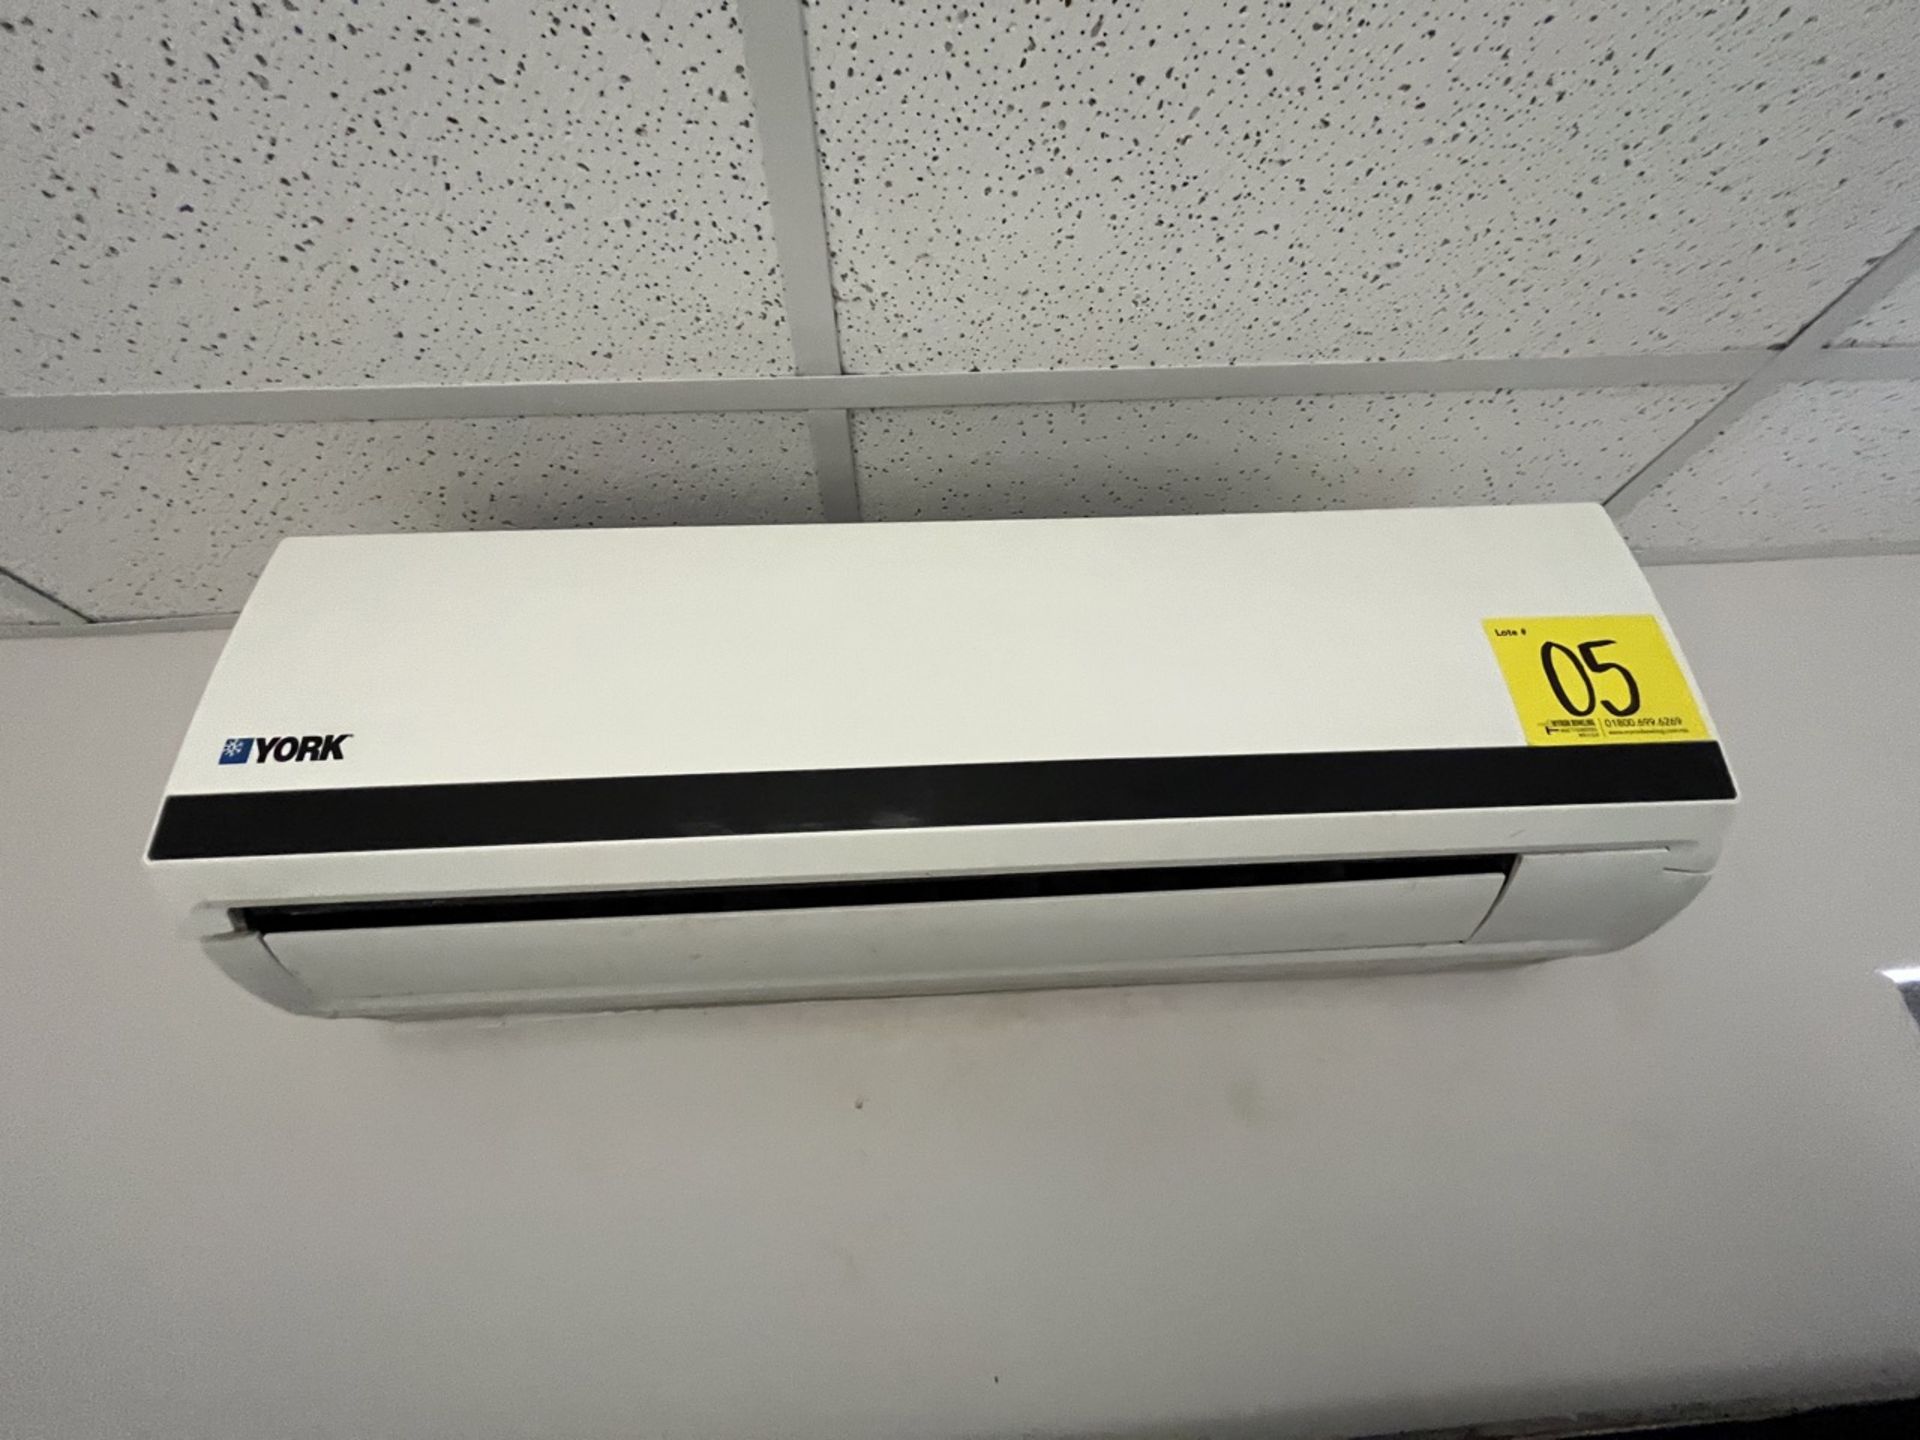 York minisplit air conditioner with control, Model YSEA12FS-ADK, Series 100001010140290128, 220 Vol - Image 2 of 11